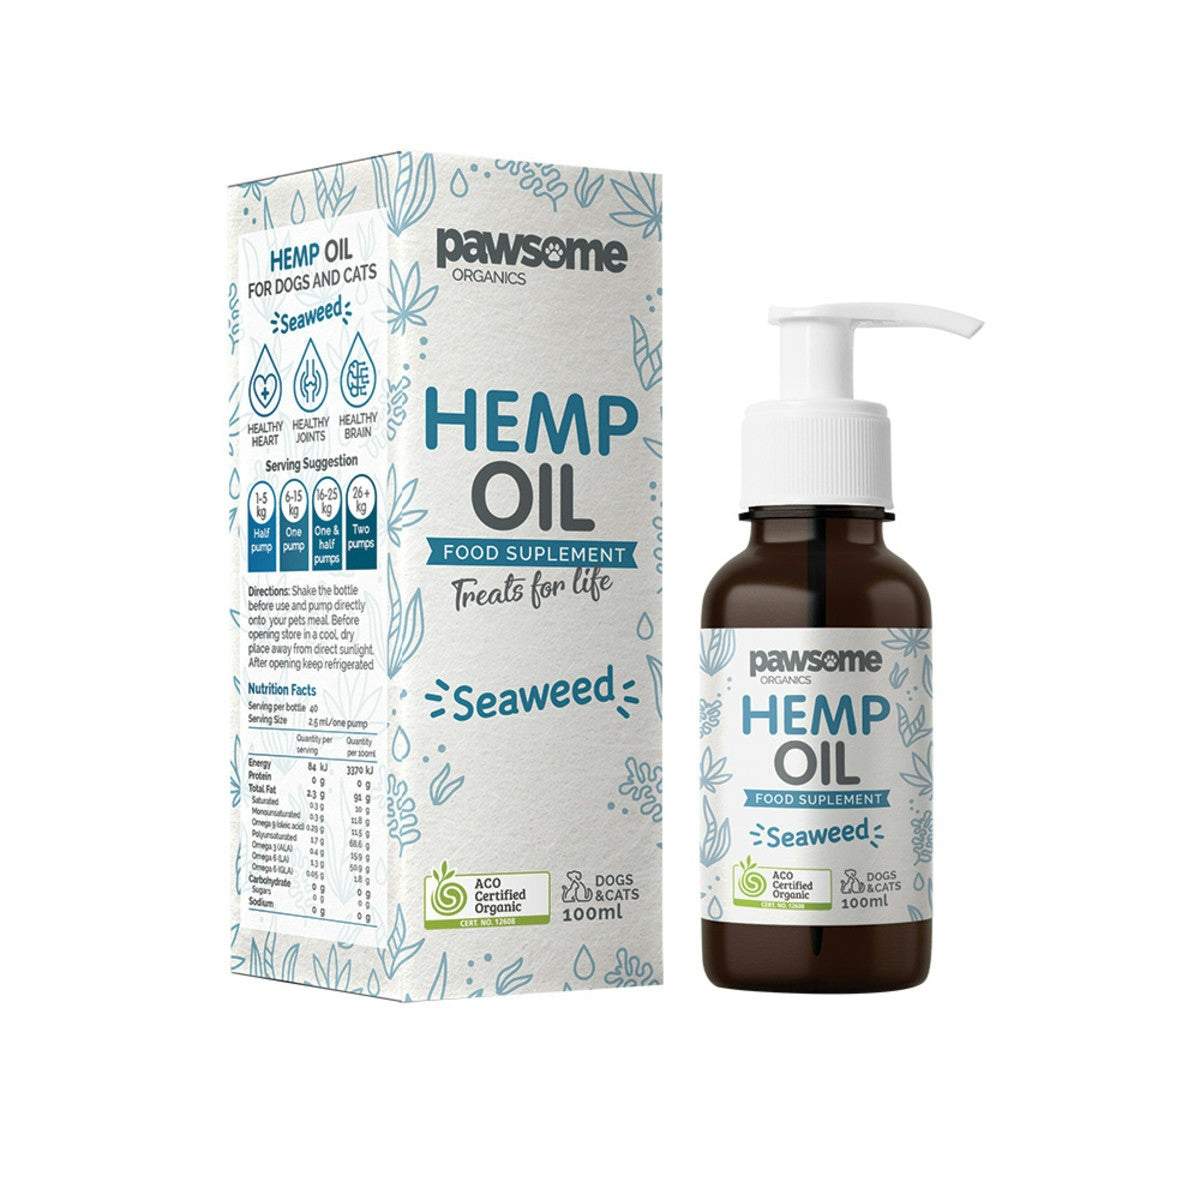 image of Pawsome Organics Pet Hemp Oil Seaweed 100ml on white background 